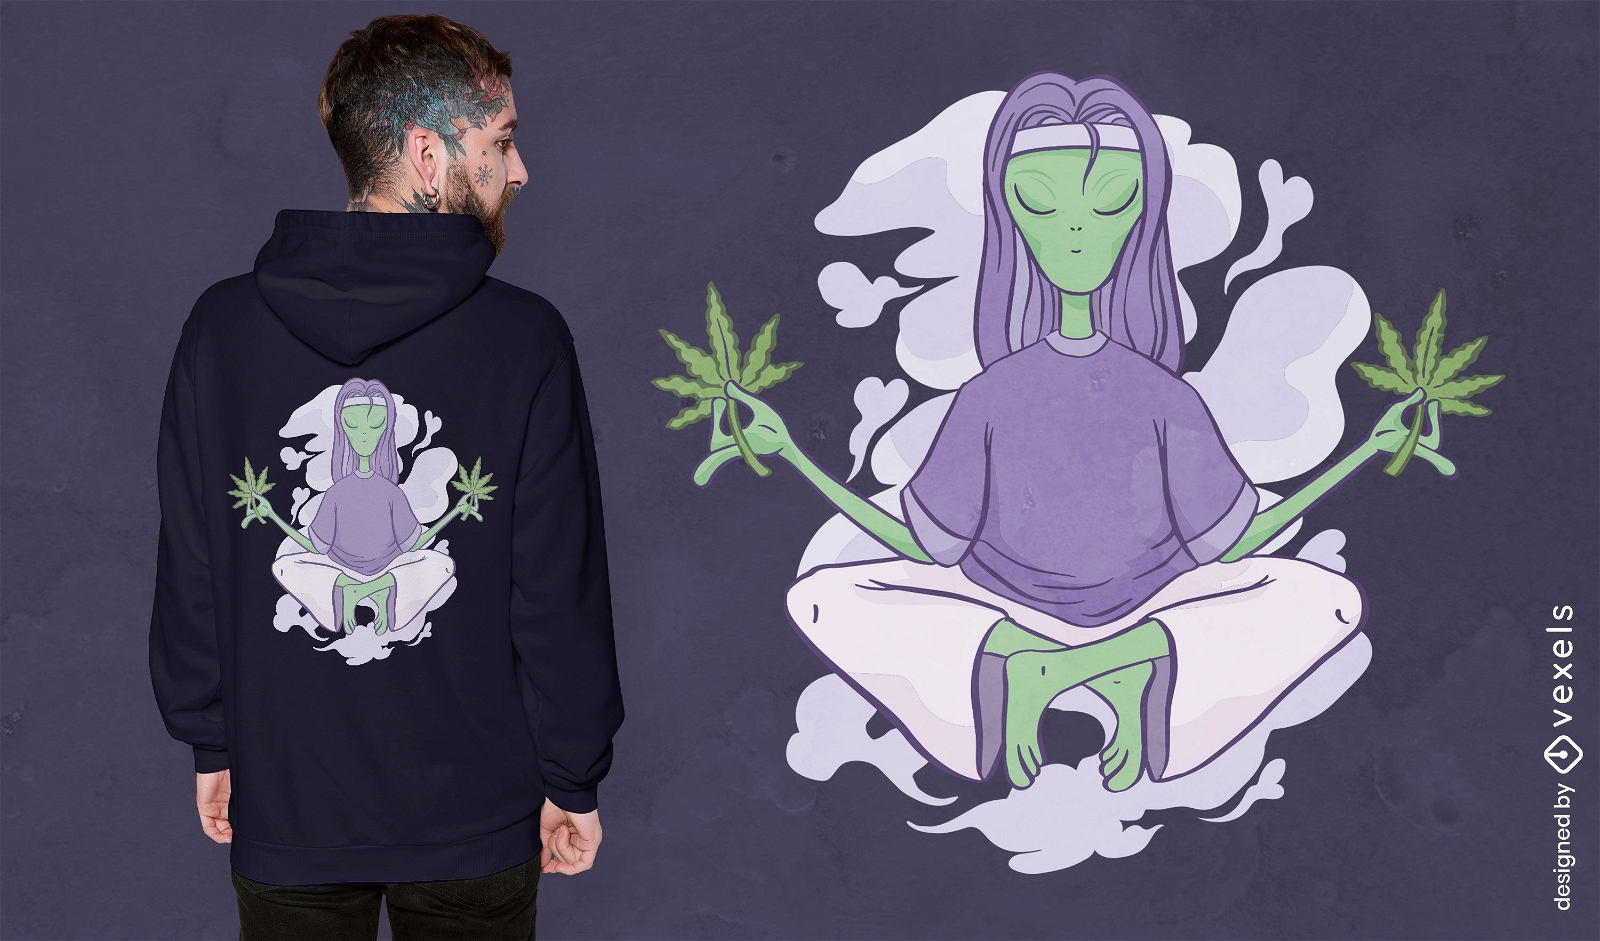 Alien meditation with marihuana t-shirt design